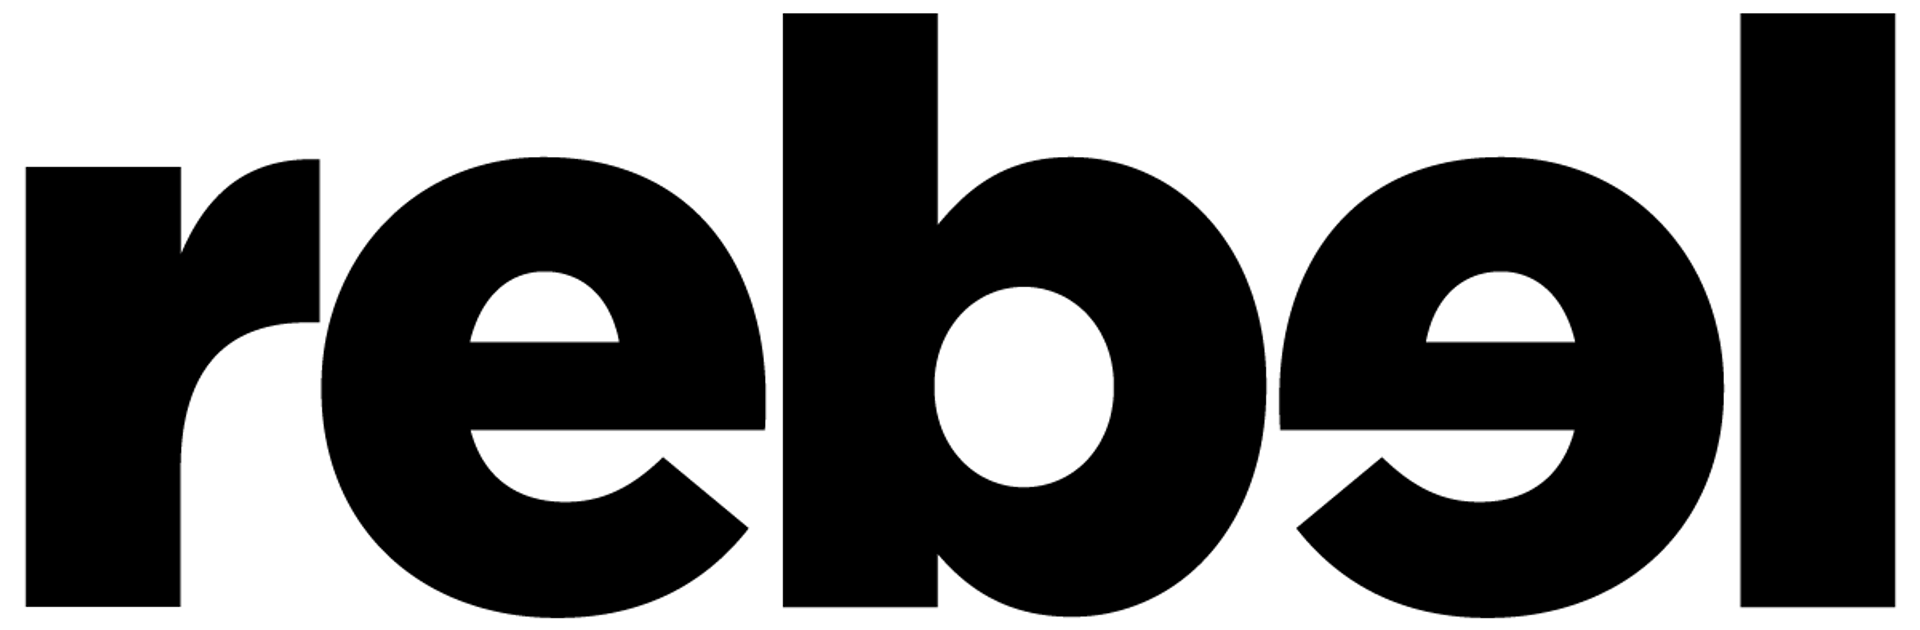 REBEL SPORT logo of current catalogue